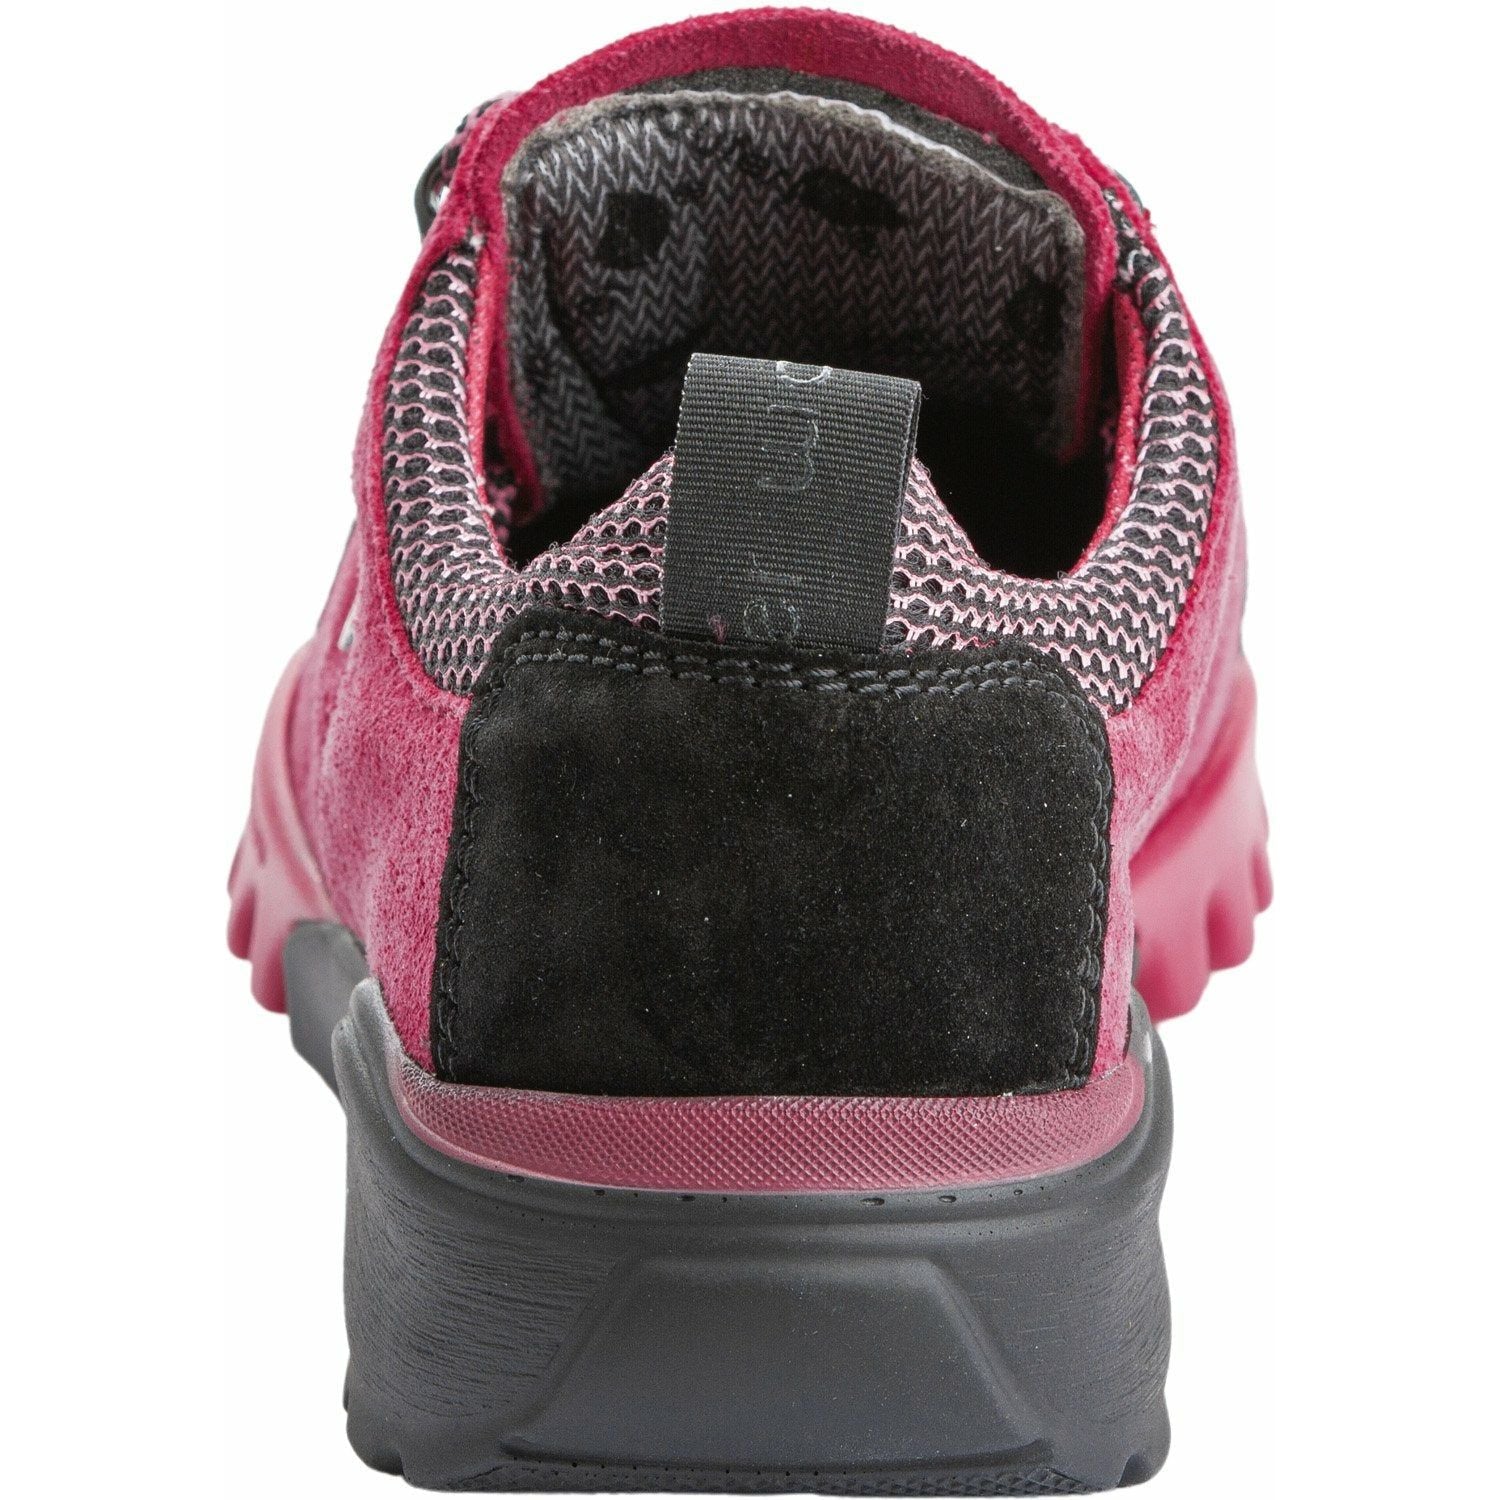 Waldlaufer Amiata (787950) - Ladies Walking Shoe | Waldlaufer | Wide Fit Shoes | Wisemans | Bantry | West Cork | Ireland